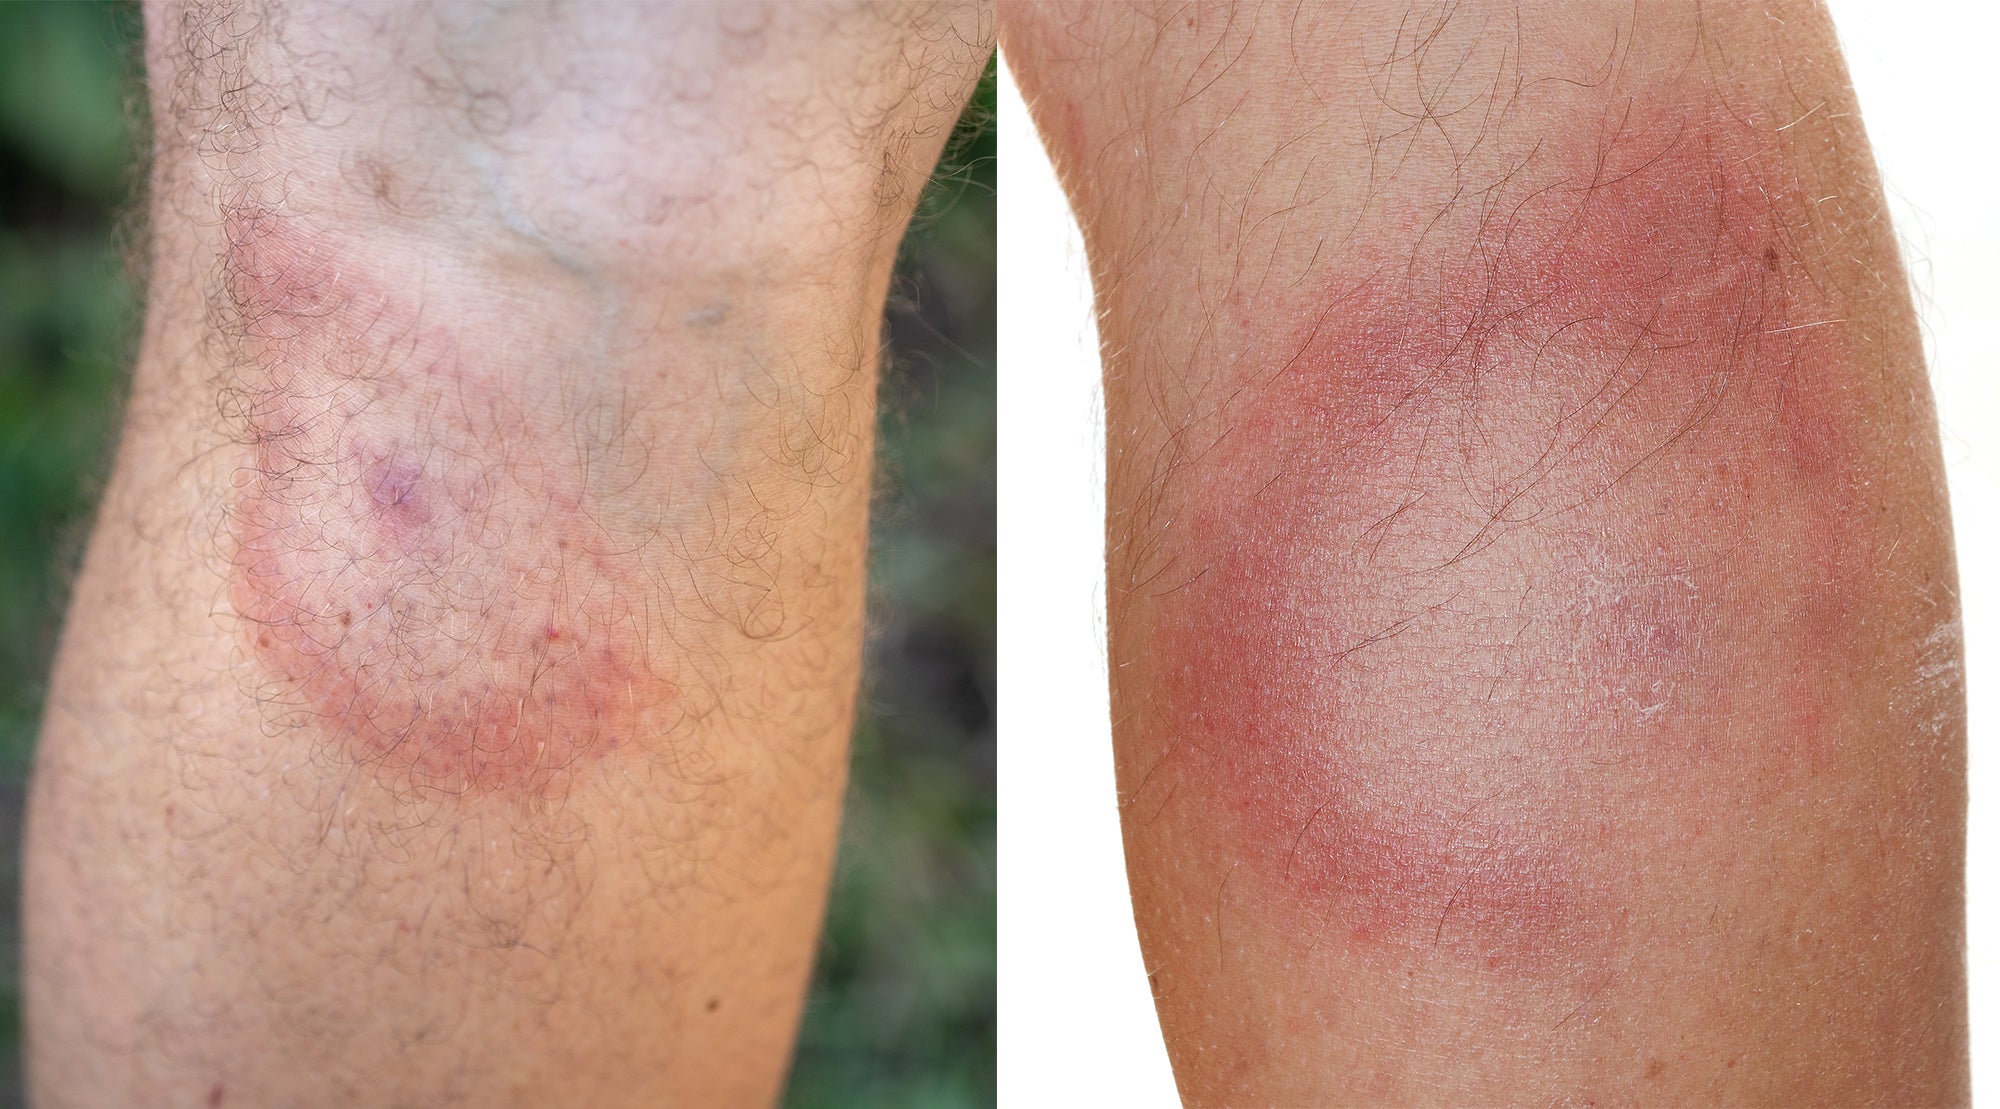 photos of bullseye rashes, a common tick bite symptom